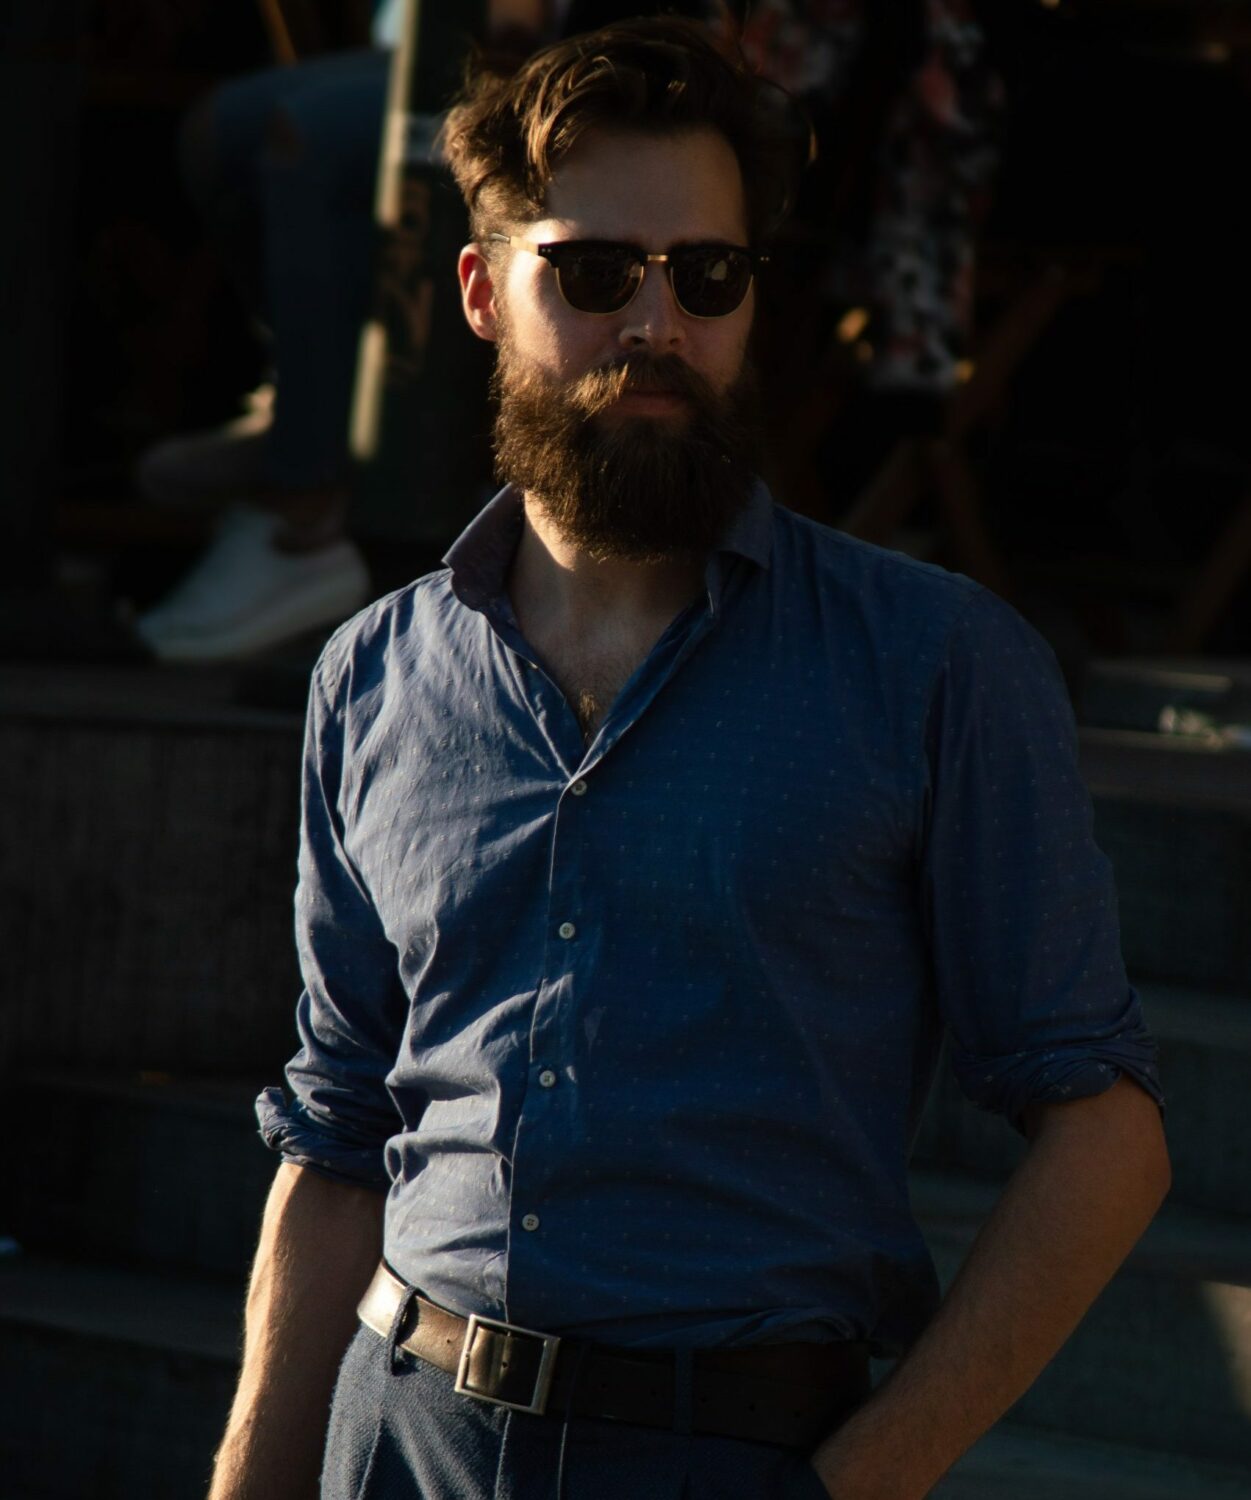 beard man with sunglasses walking